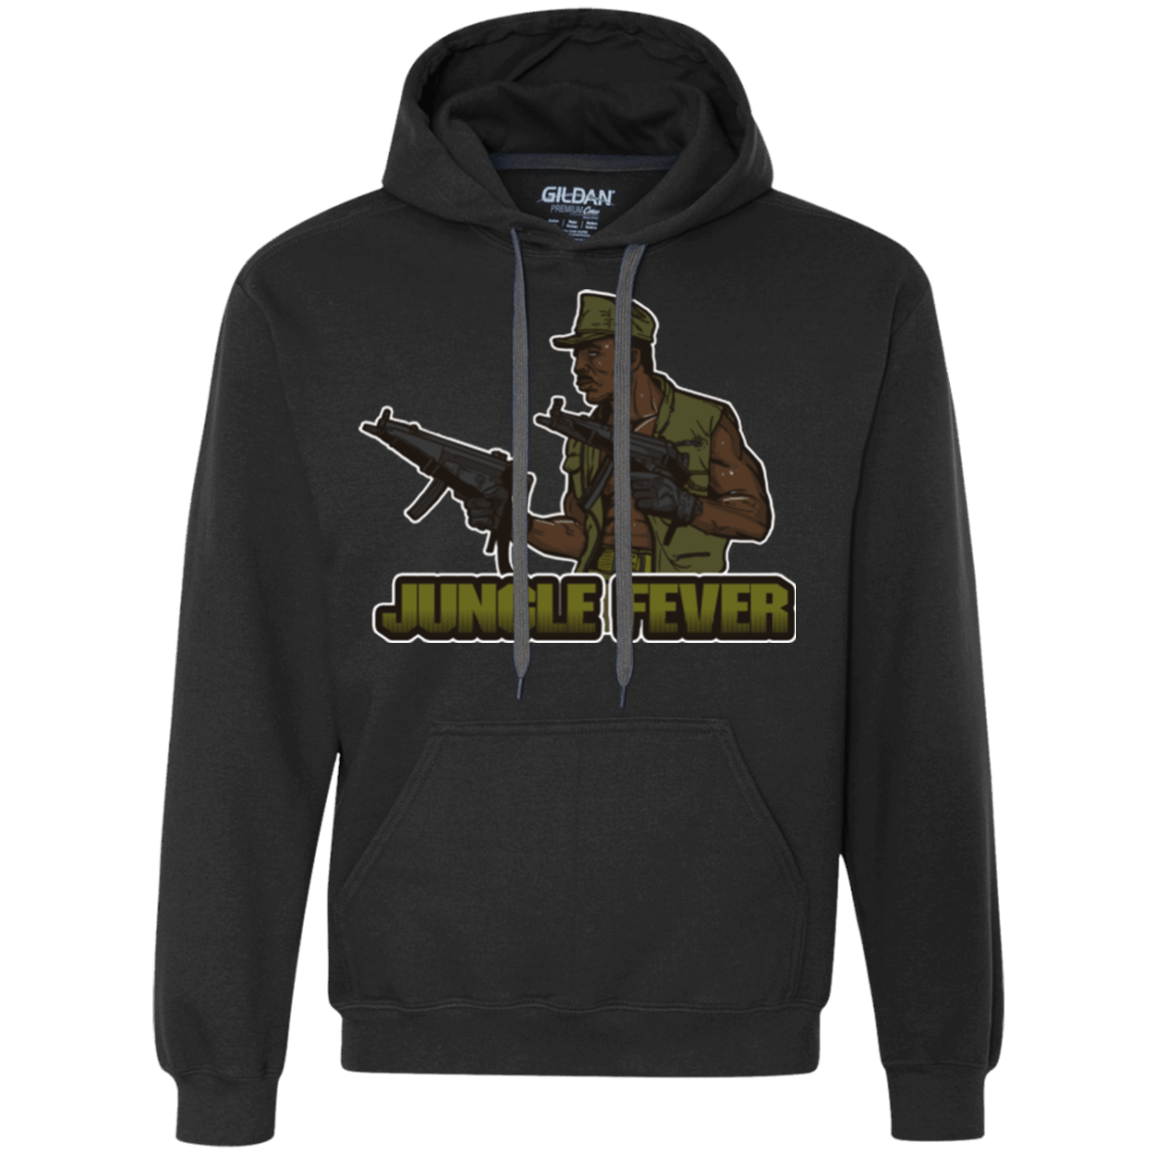 Sweatshirts Black / Small Jungle Fever Premium Fleece Hoodie